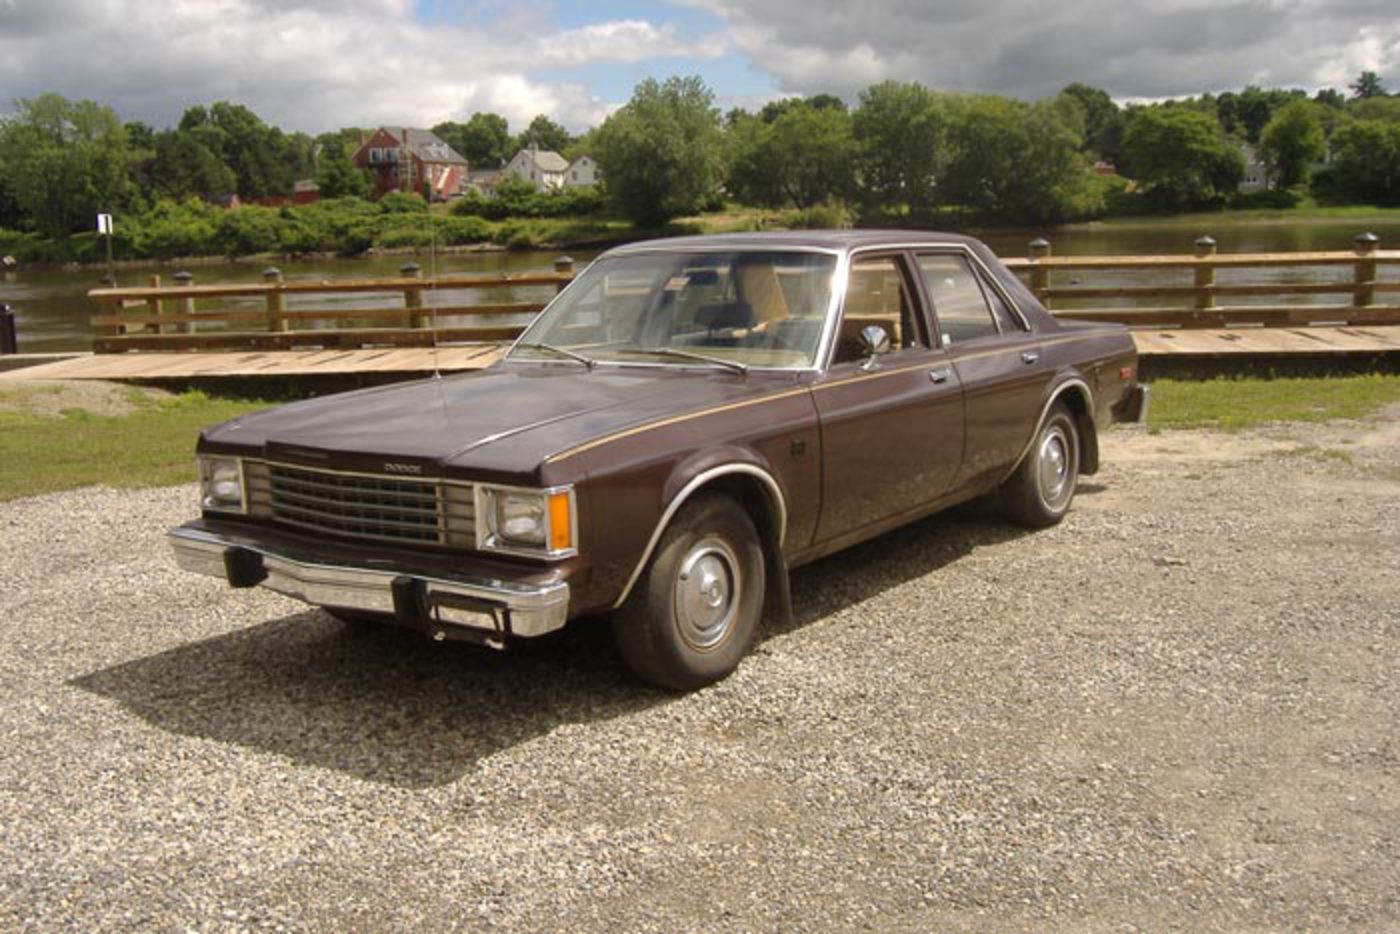 they were 17) 1980 Dodge Aspen sedan (112.7" wheelbase)